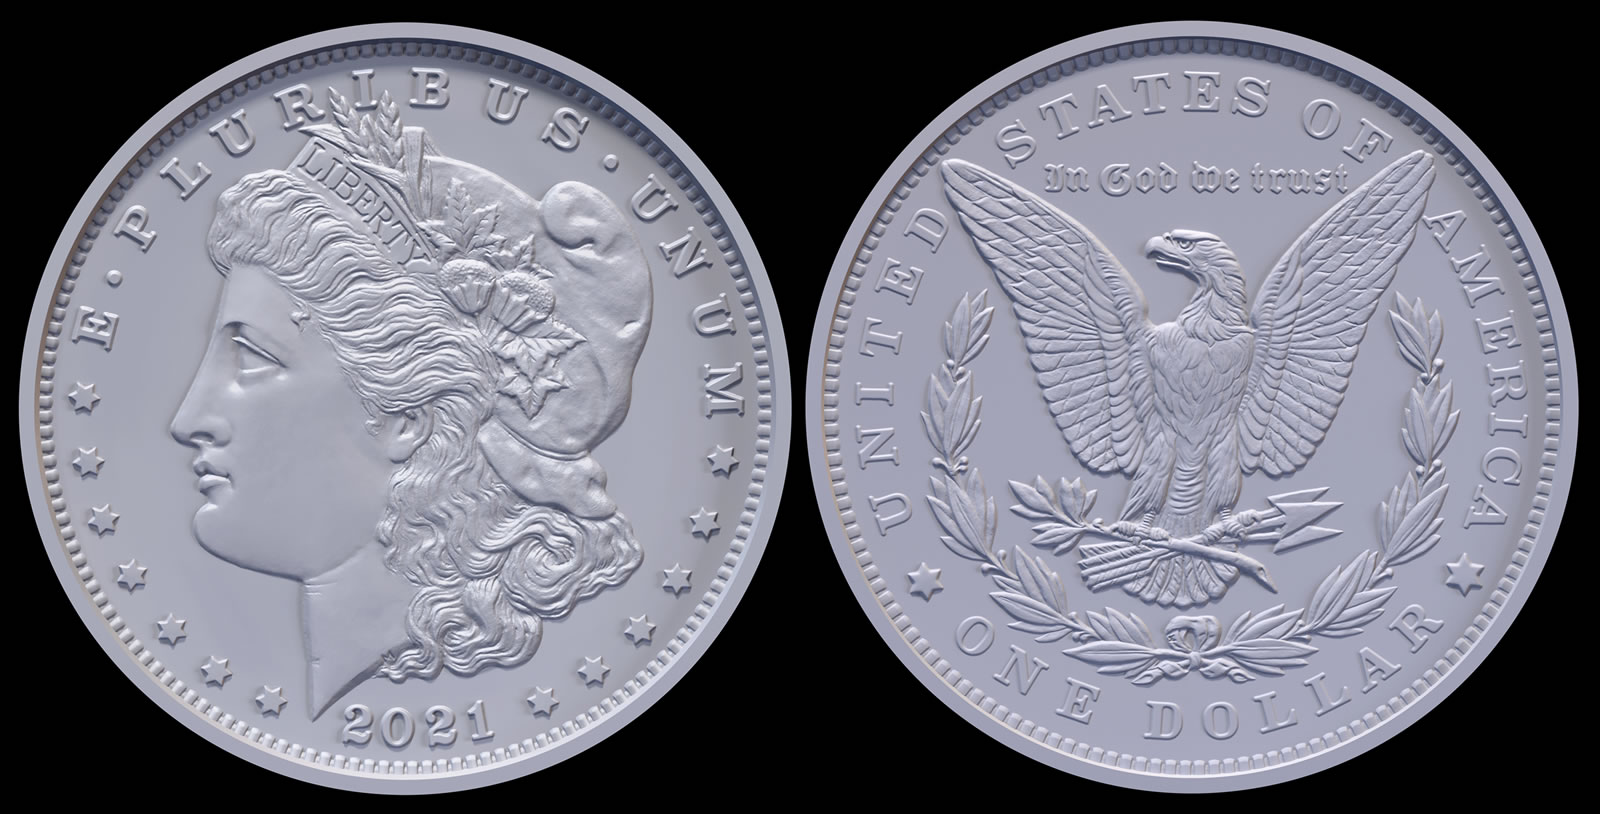 morgan 2021 silver dollar